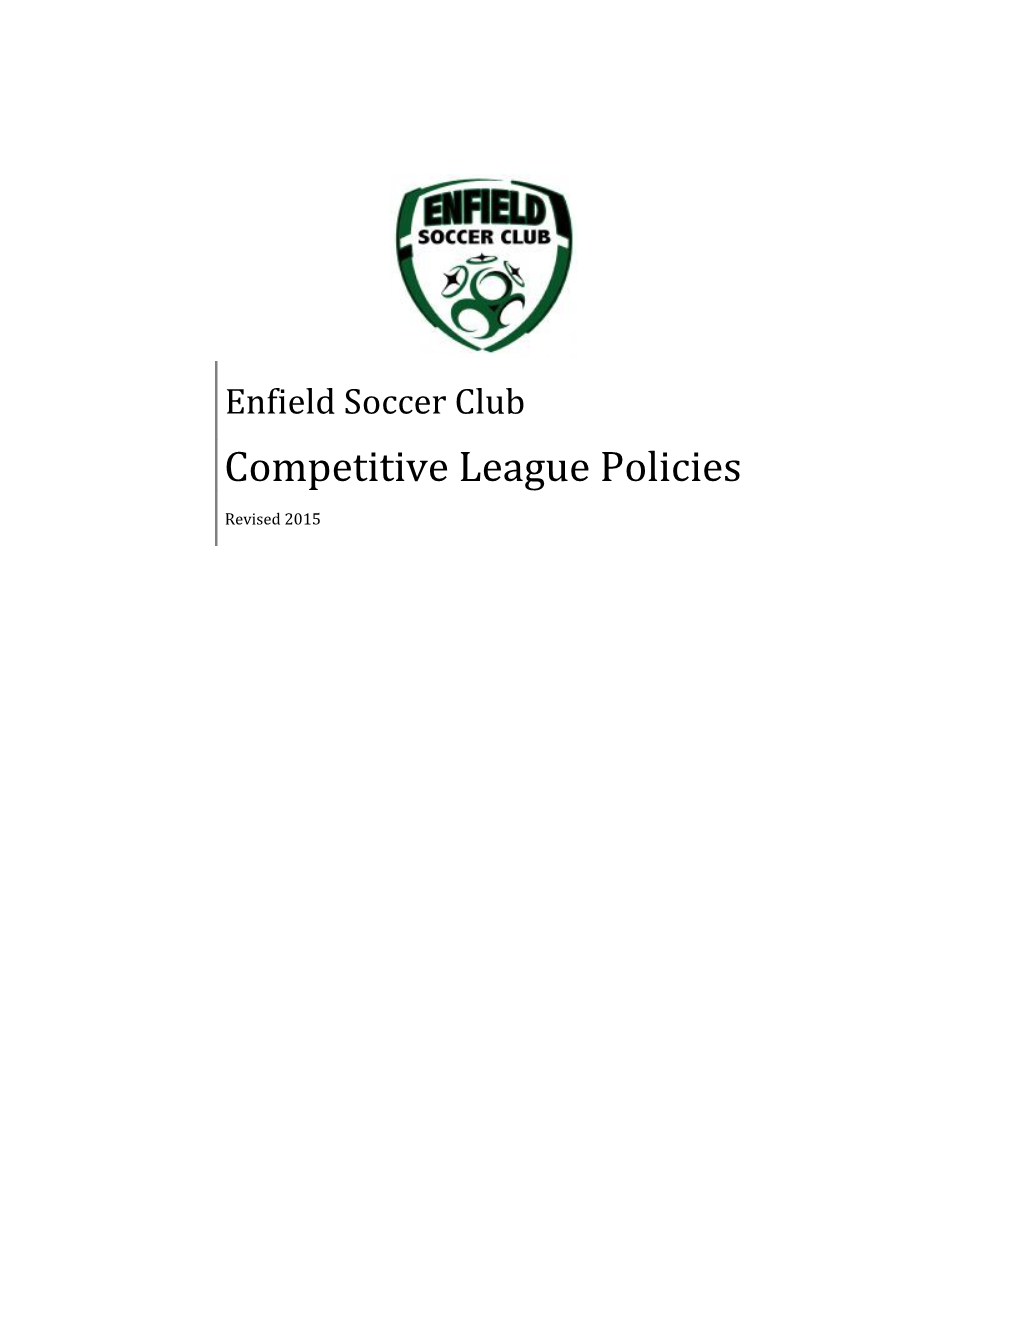 2010 Competitive League Policies